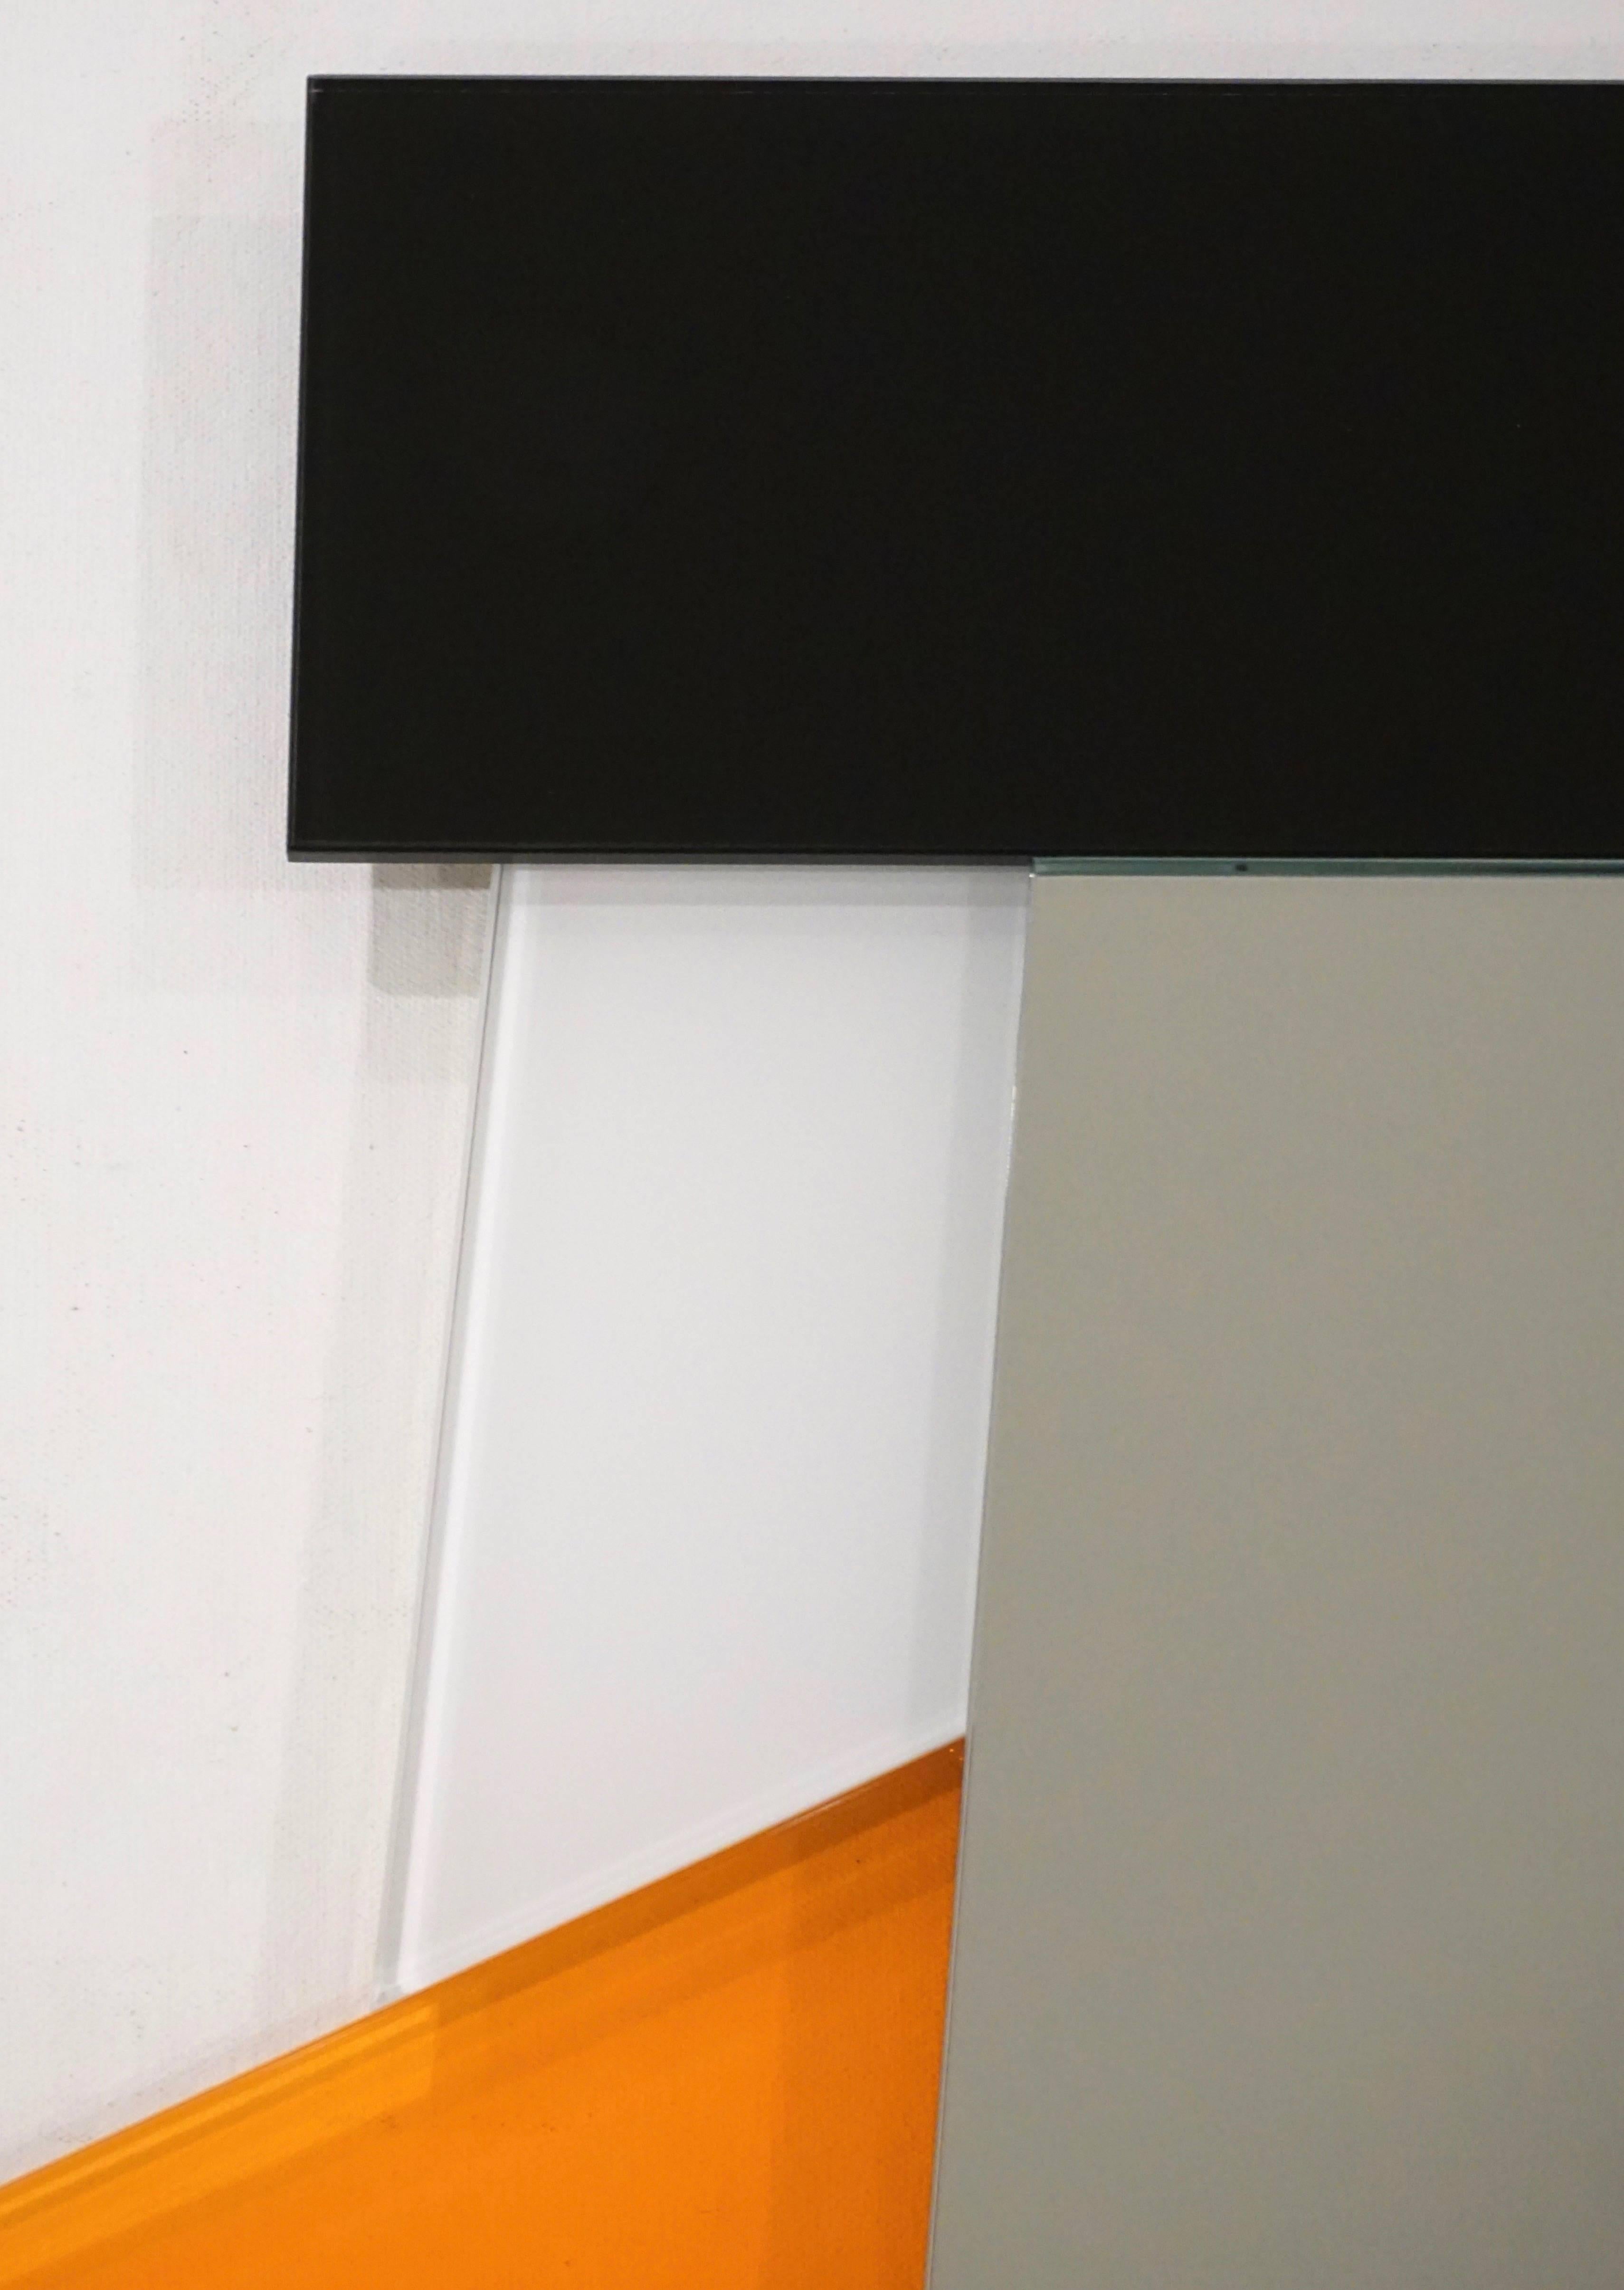 Italian Ettore Sottsass 2007 Post-Modern Prism Black White Orange Mirror for Glas Italia